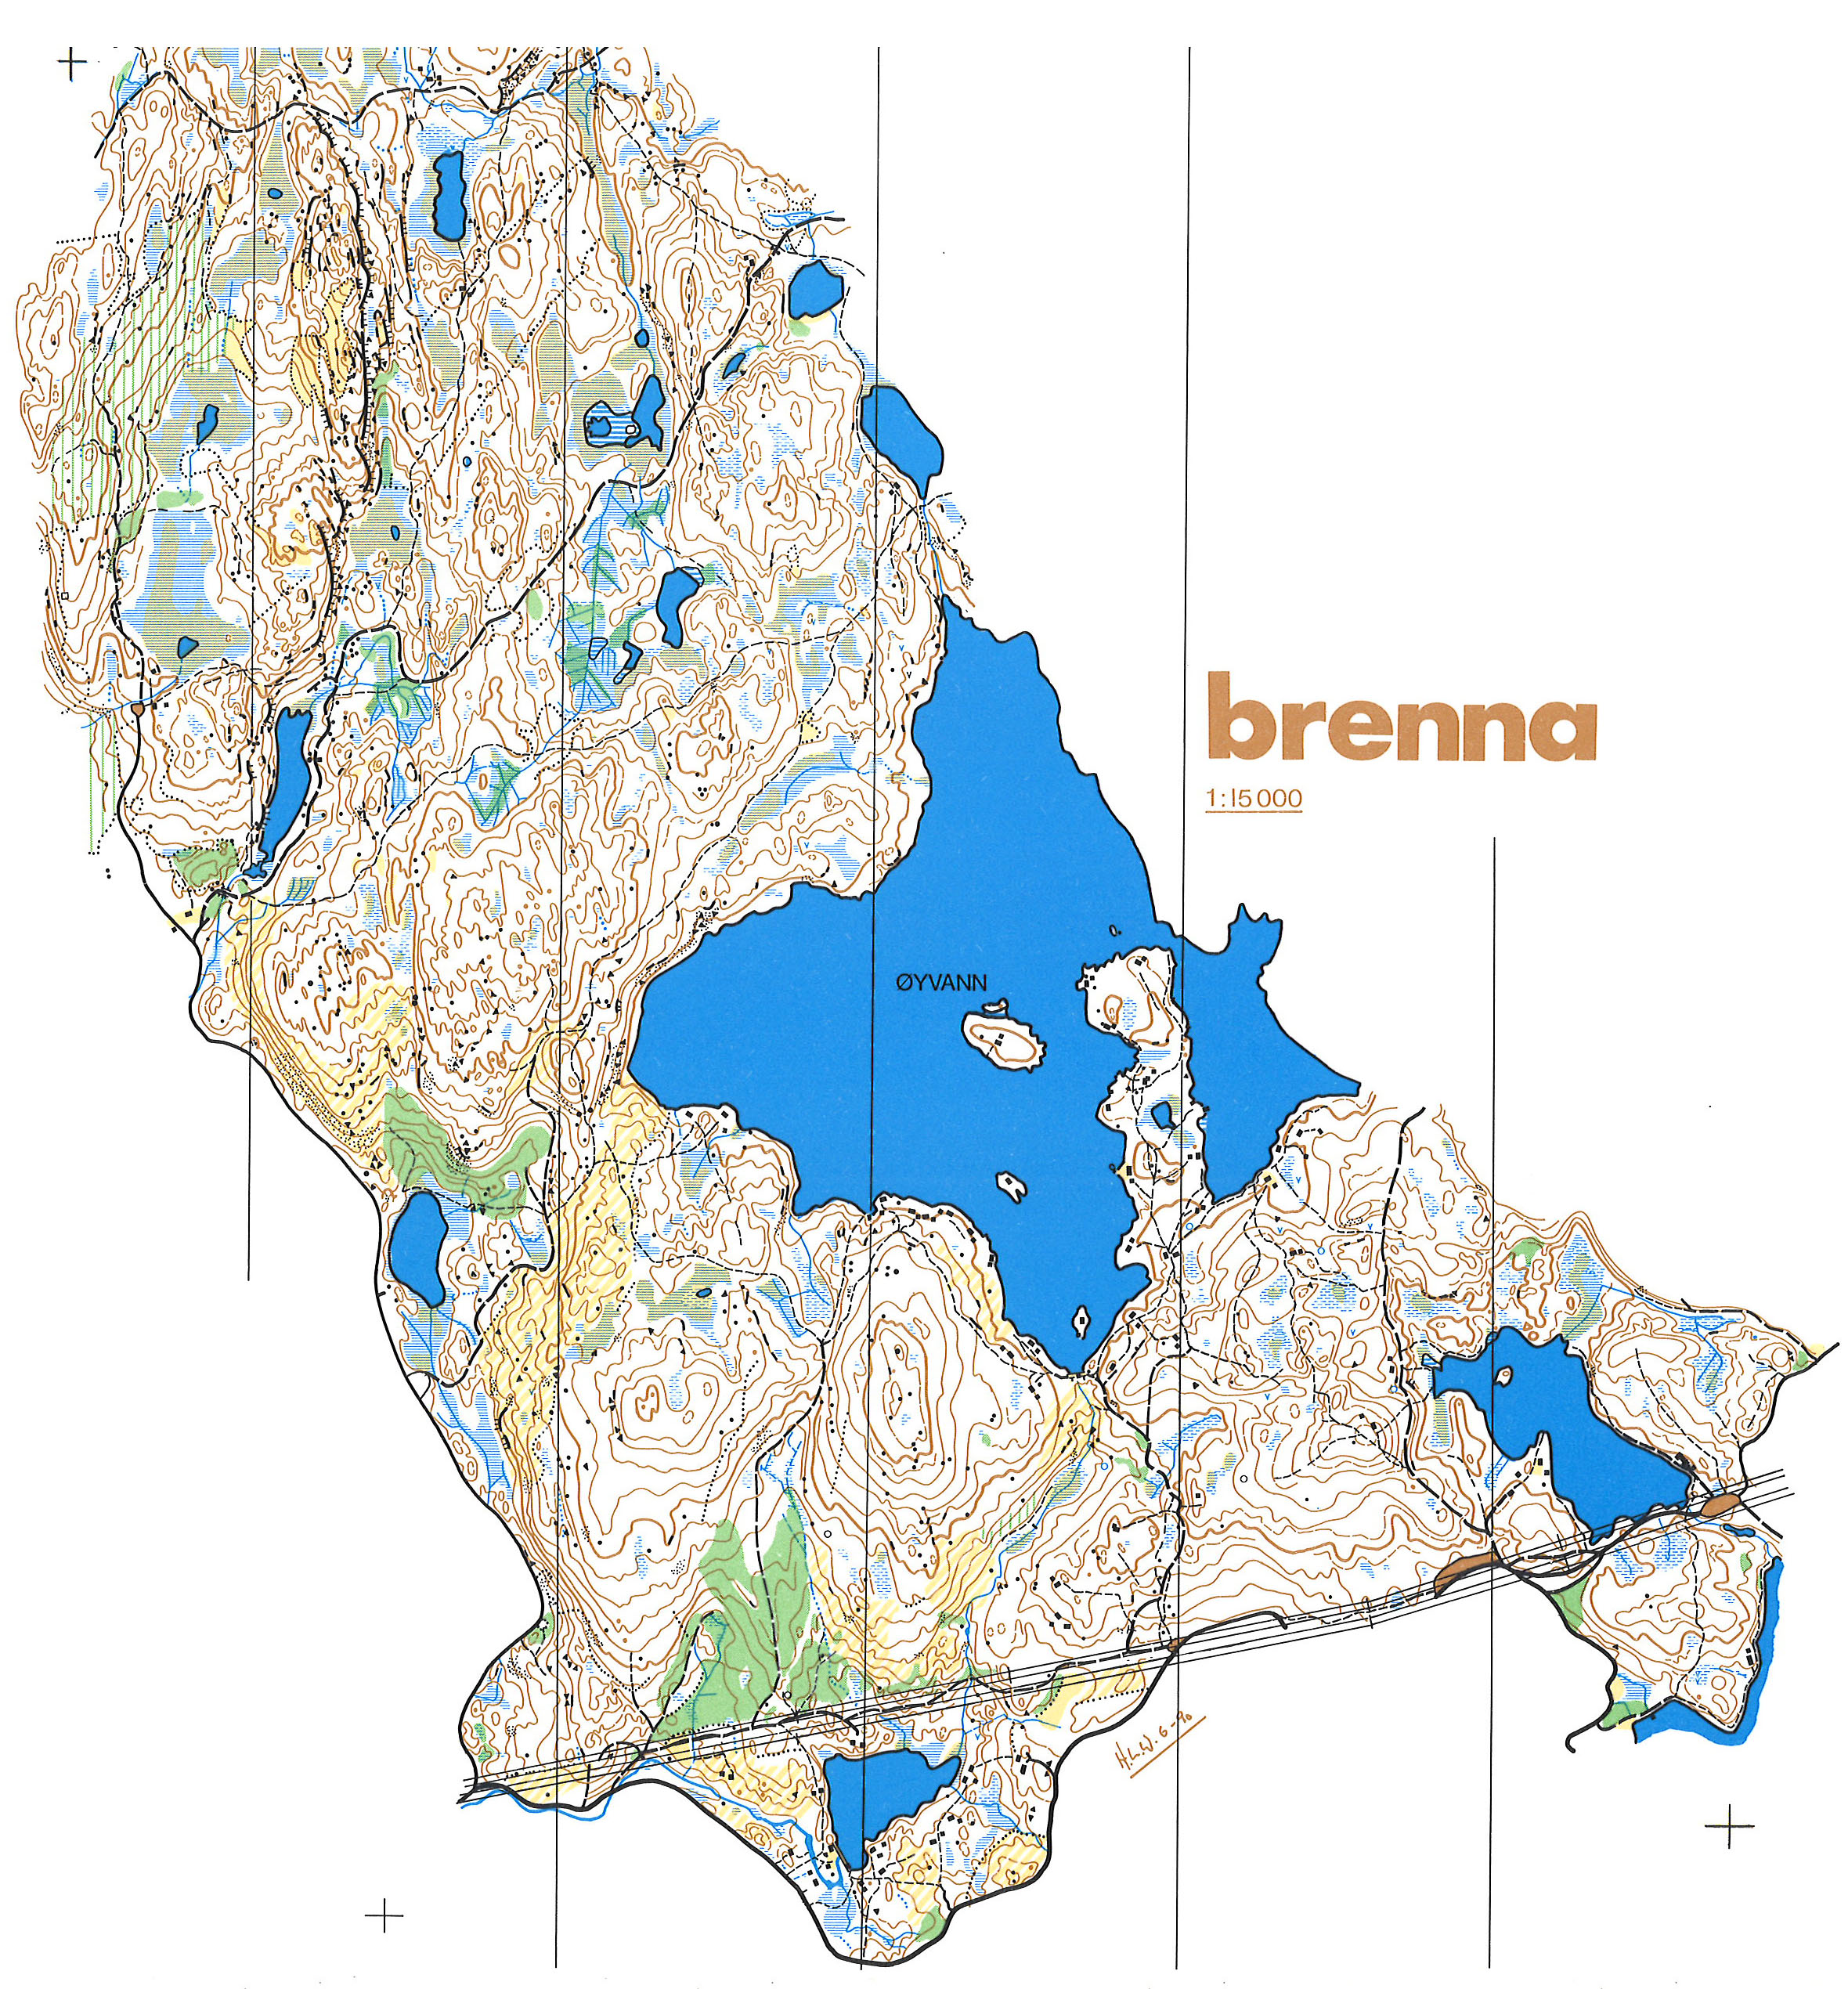 Brenna (1990-01-01)